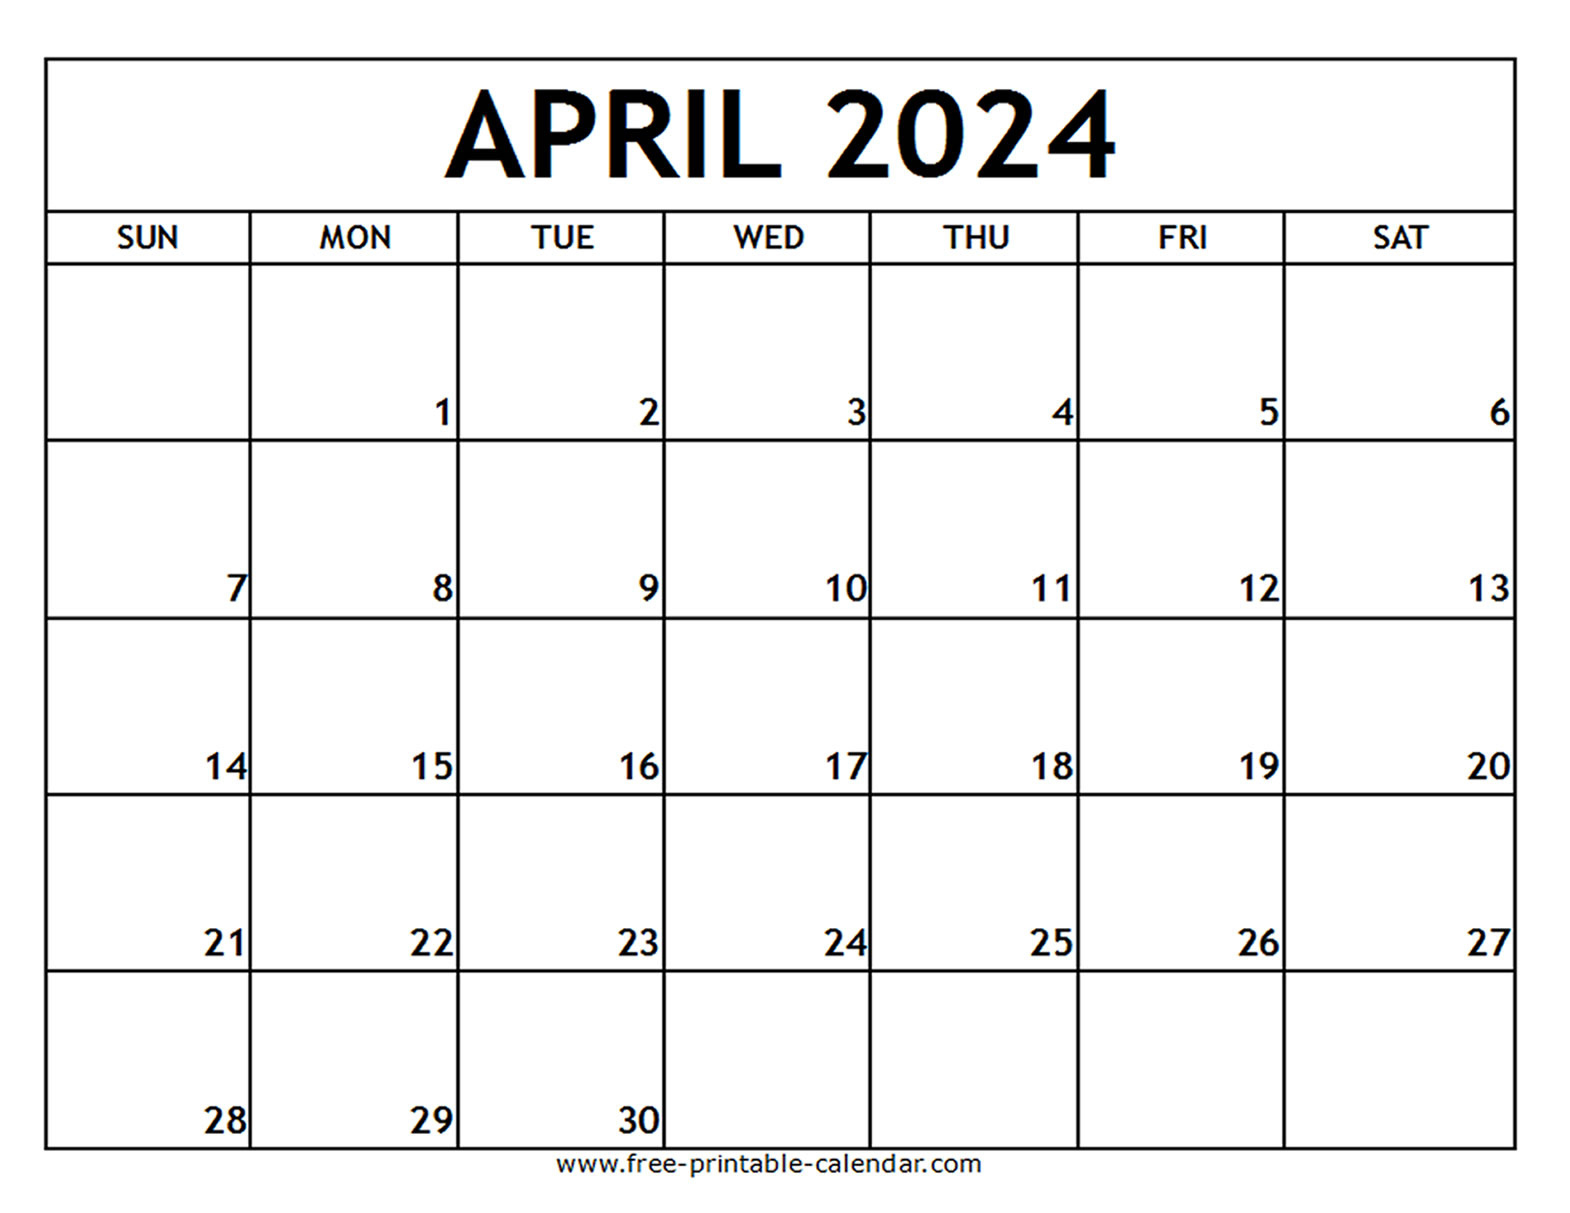 April 2024 Printable Calendar - Free-Printable-Calendar within Free Printable Calendar April And May 2024